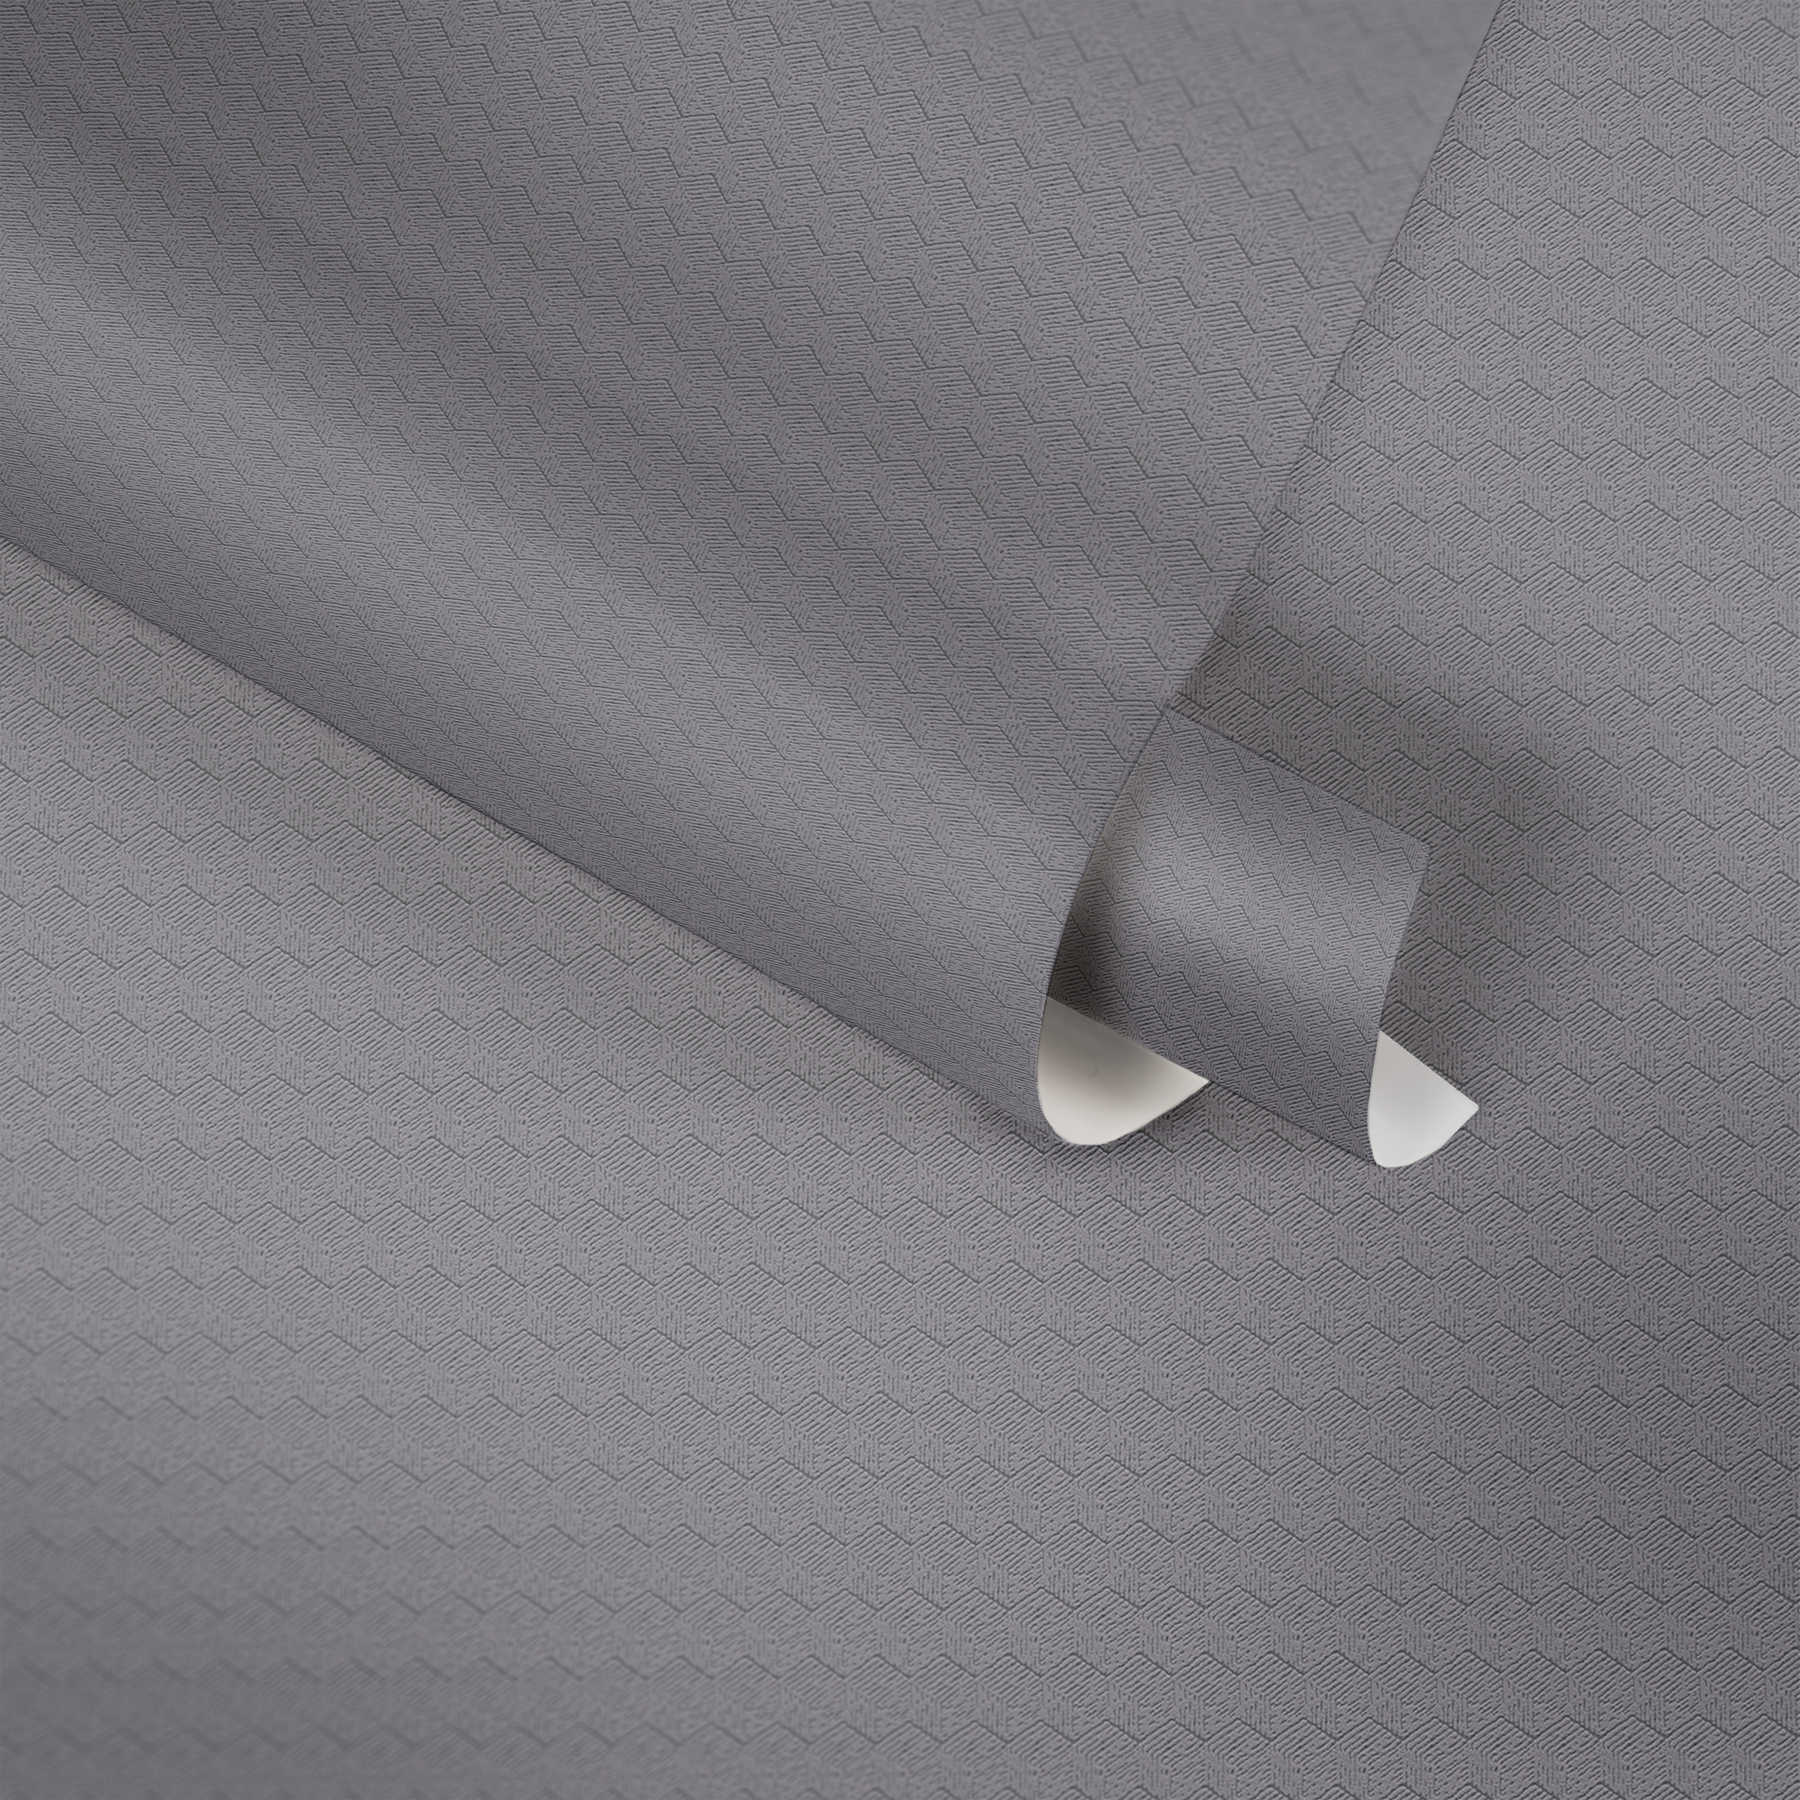             Wallpaper zigzag design & texture pattern - grey
        